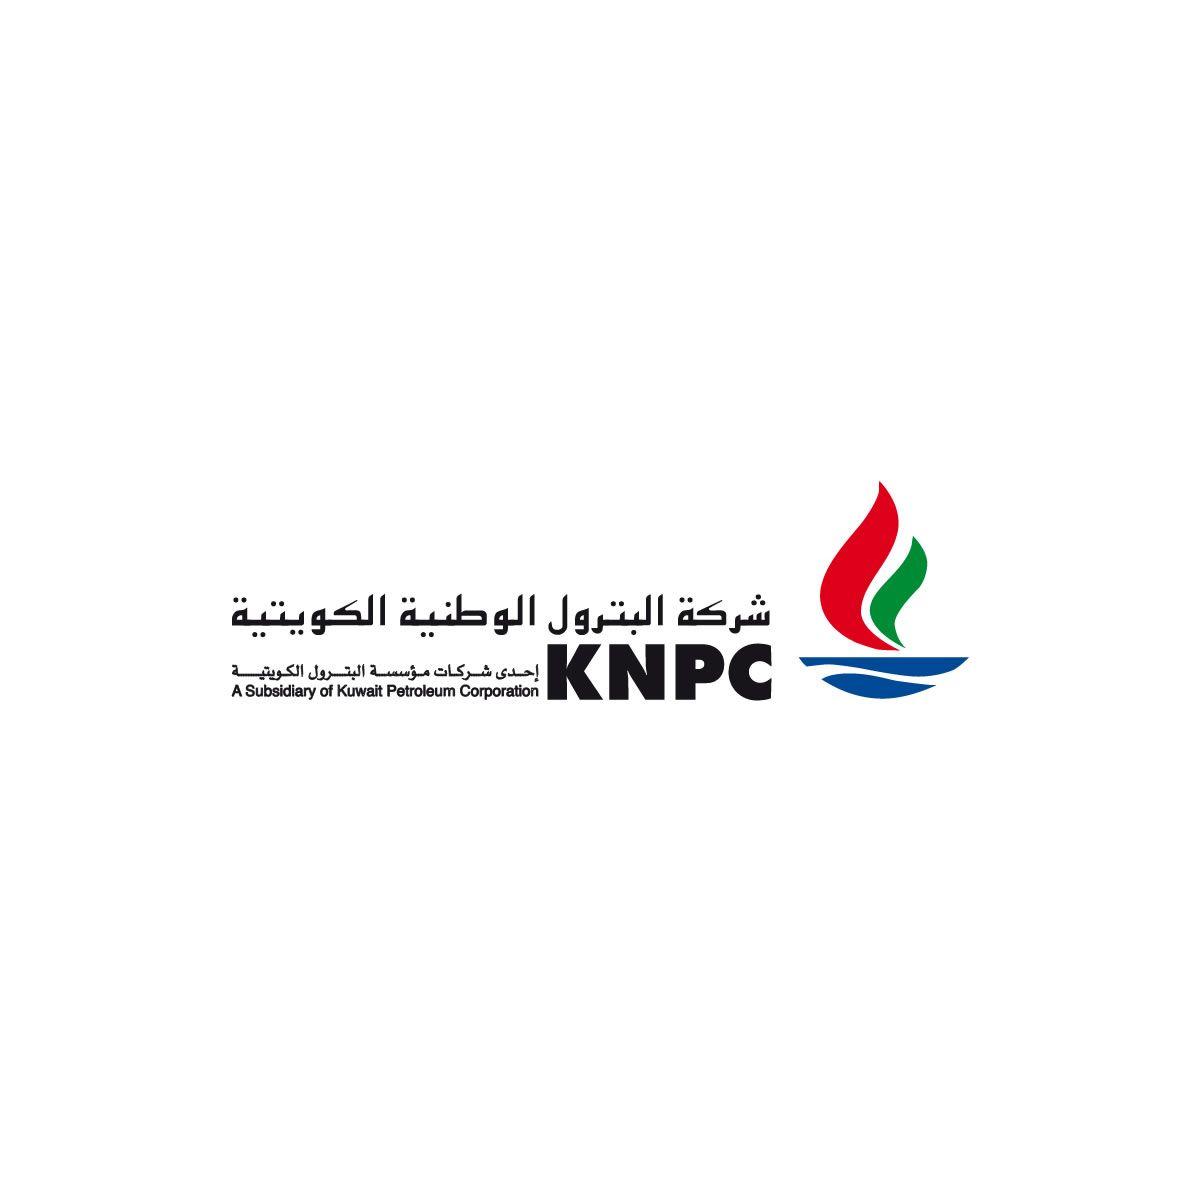 KNPC Logo - Kuwait National Petroleum Company - KNPC History